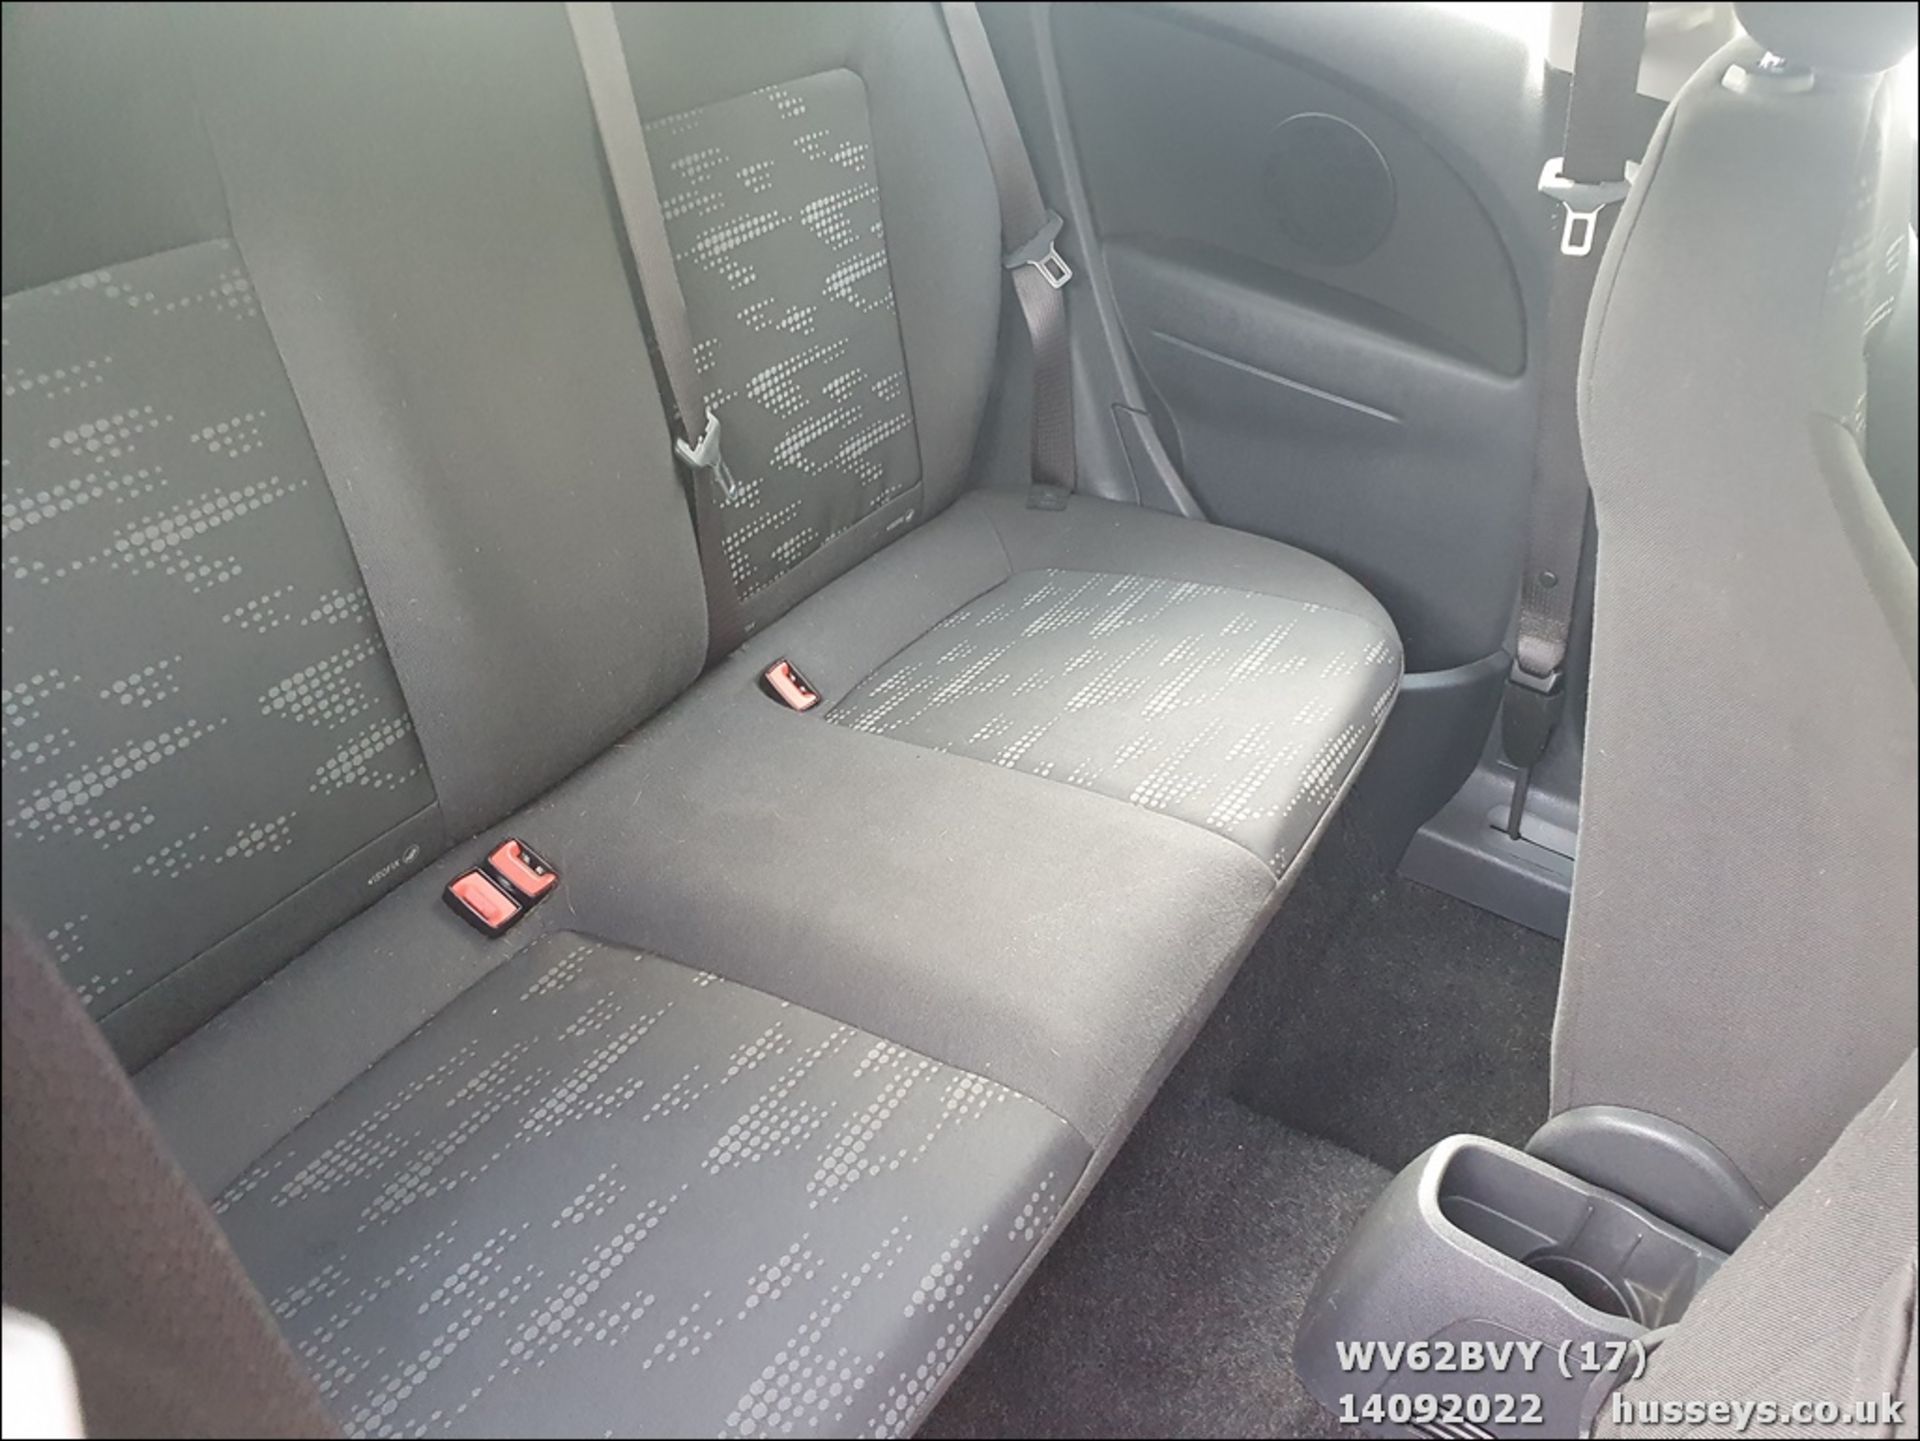 12/62 VAUXHALL CORSA EXC-IV AC CDTIEFLEX - 1248cc 3dr Hatchback (Black, 107k) - Image 17 of 23